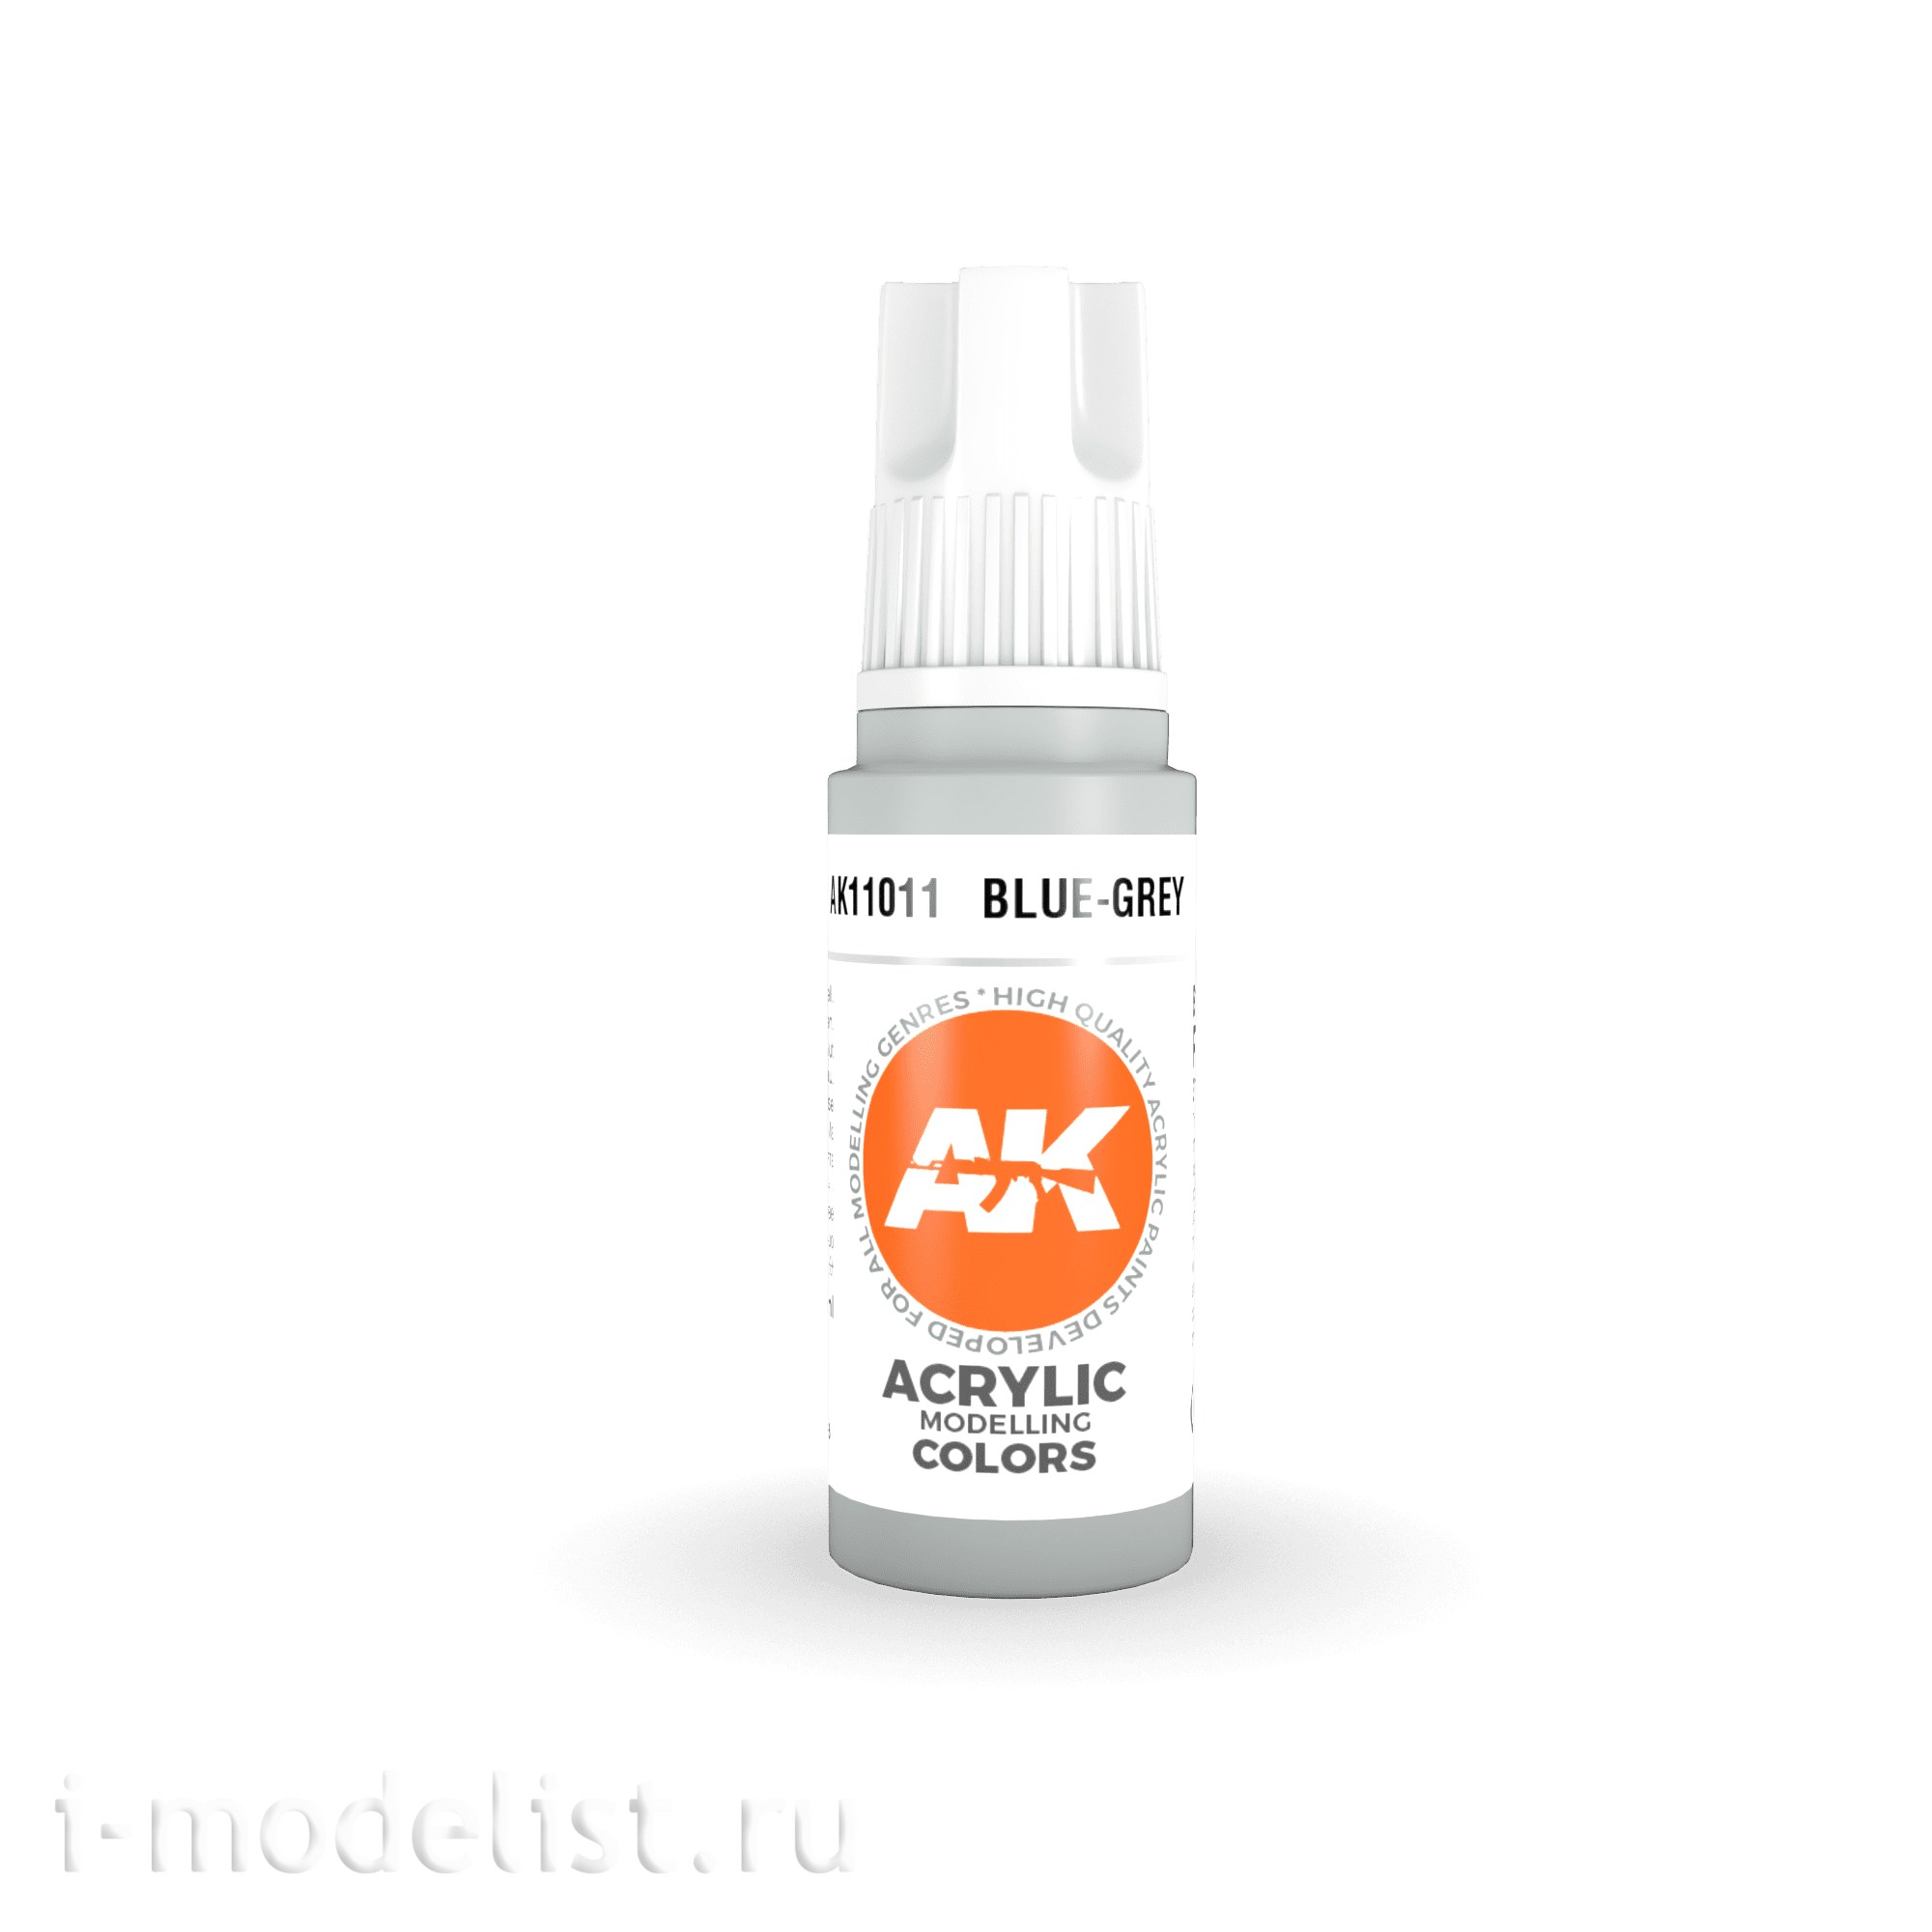 AK11011 AK Interactive acrylic Paint 3rd Generation Blue-Grey 17ml